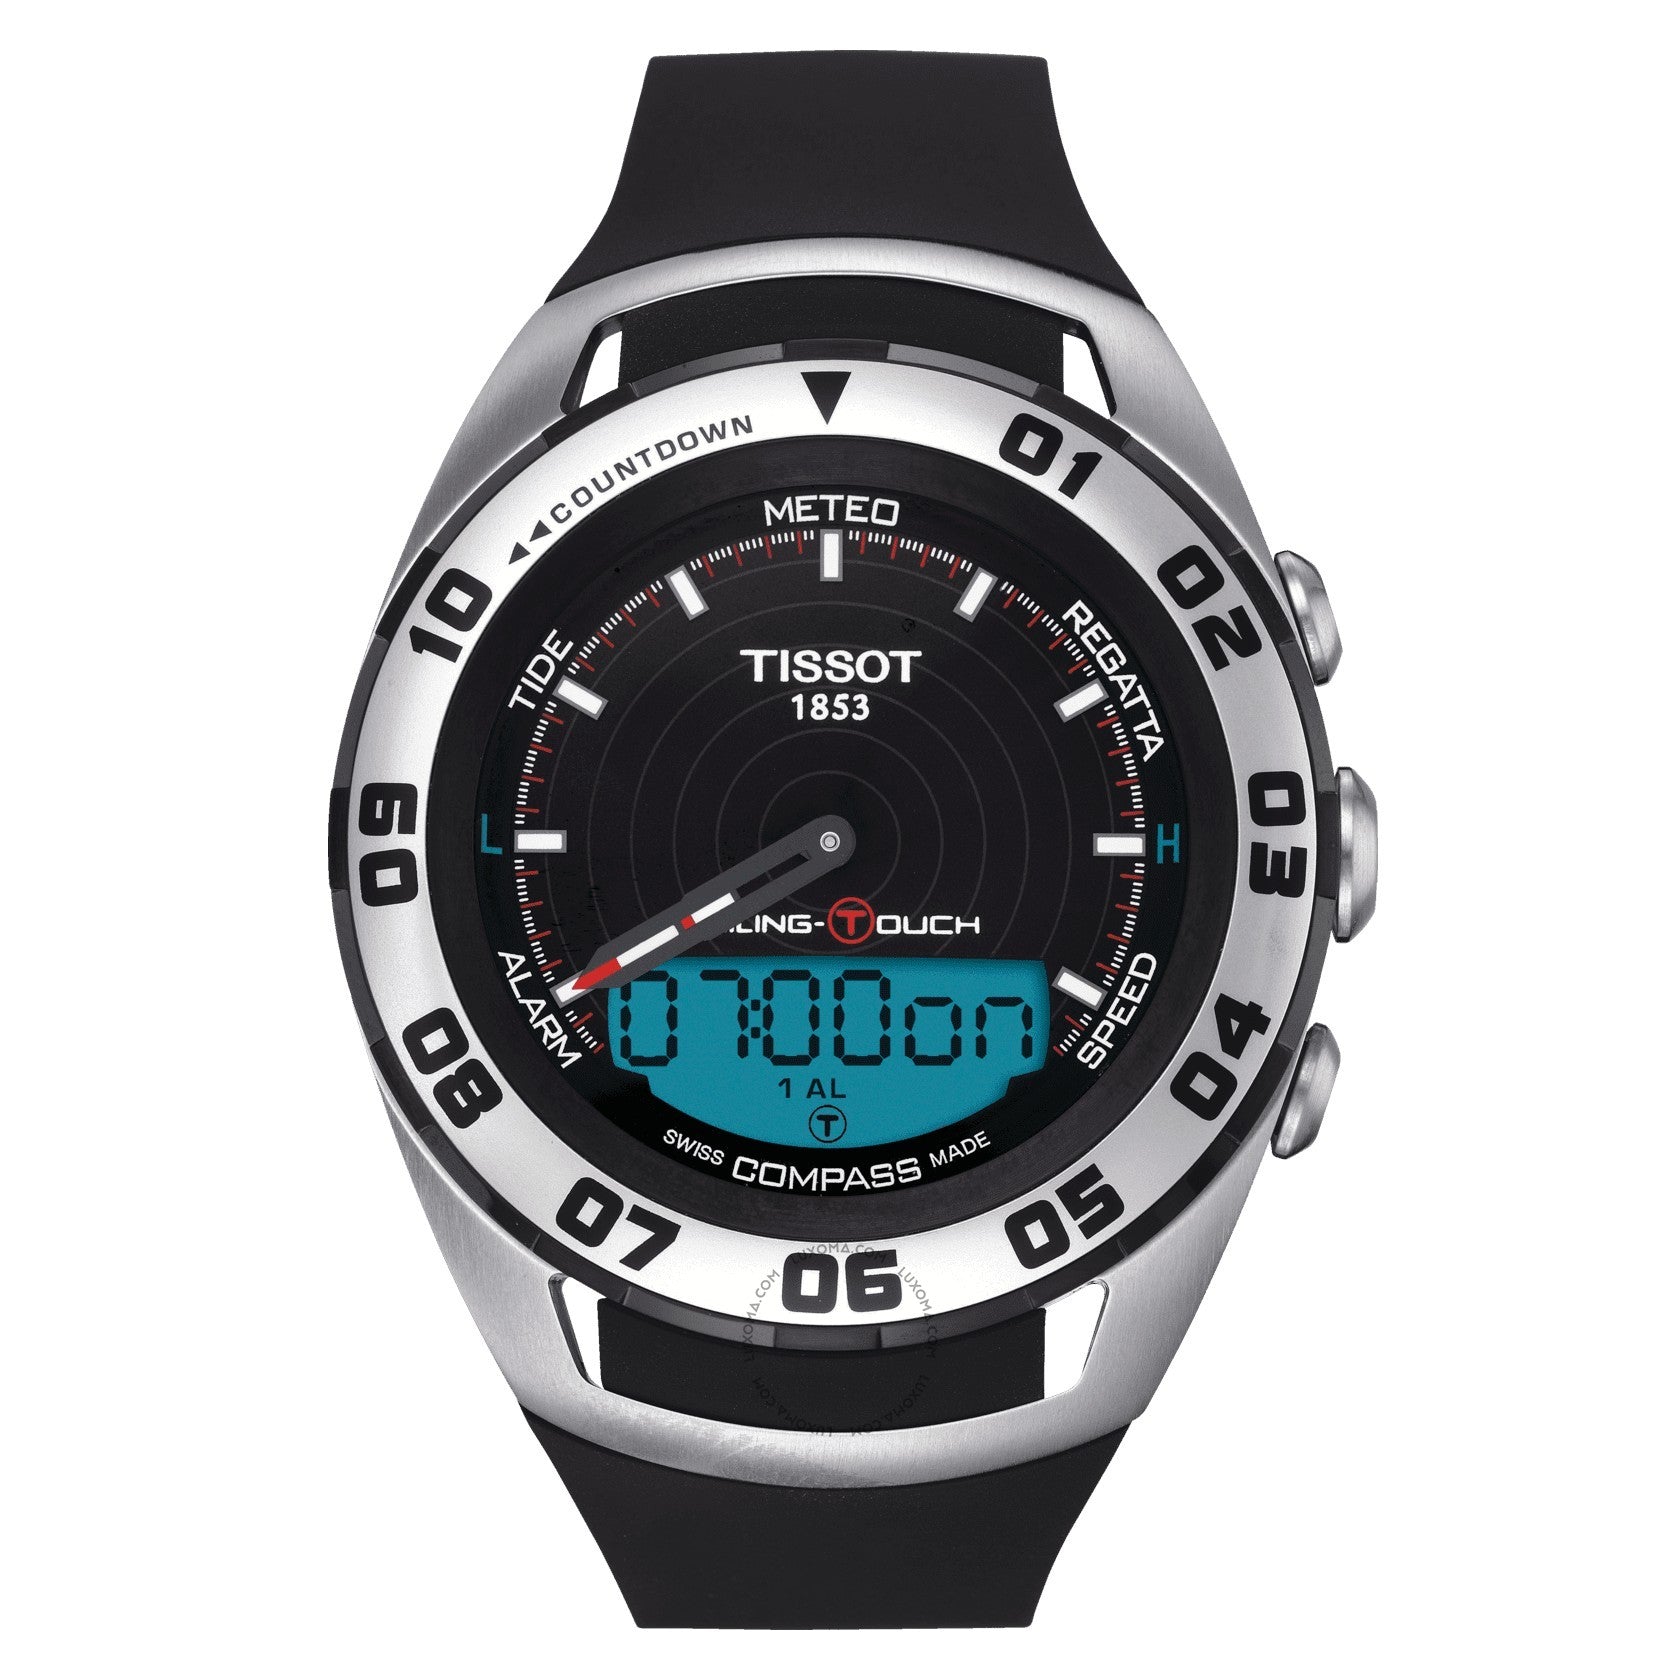 Tissot Sailing Touch Chronograph Black Digital Analog Dial Men's Watch T056.420.27.051.01